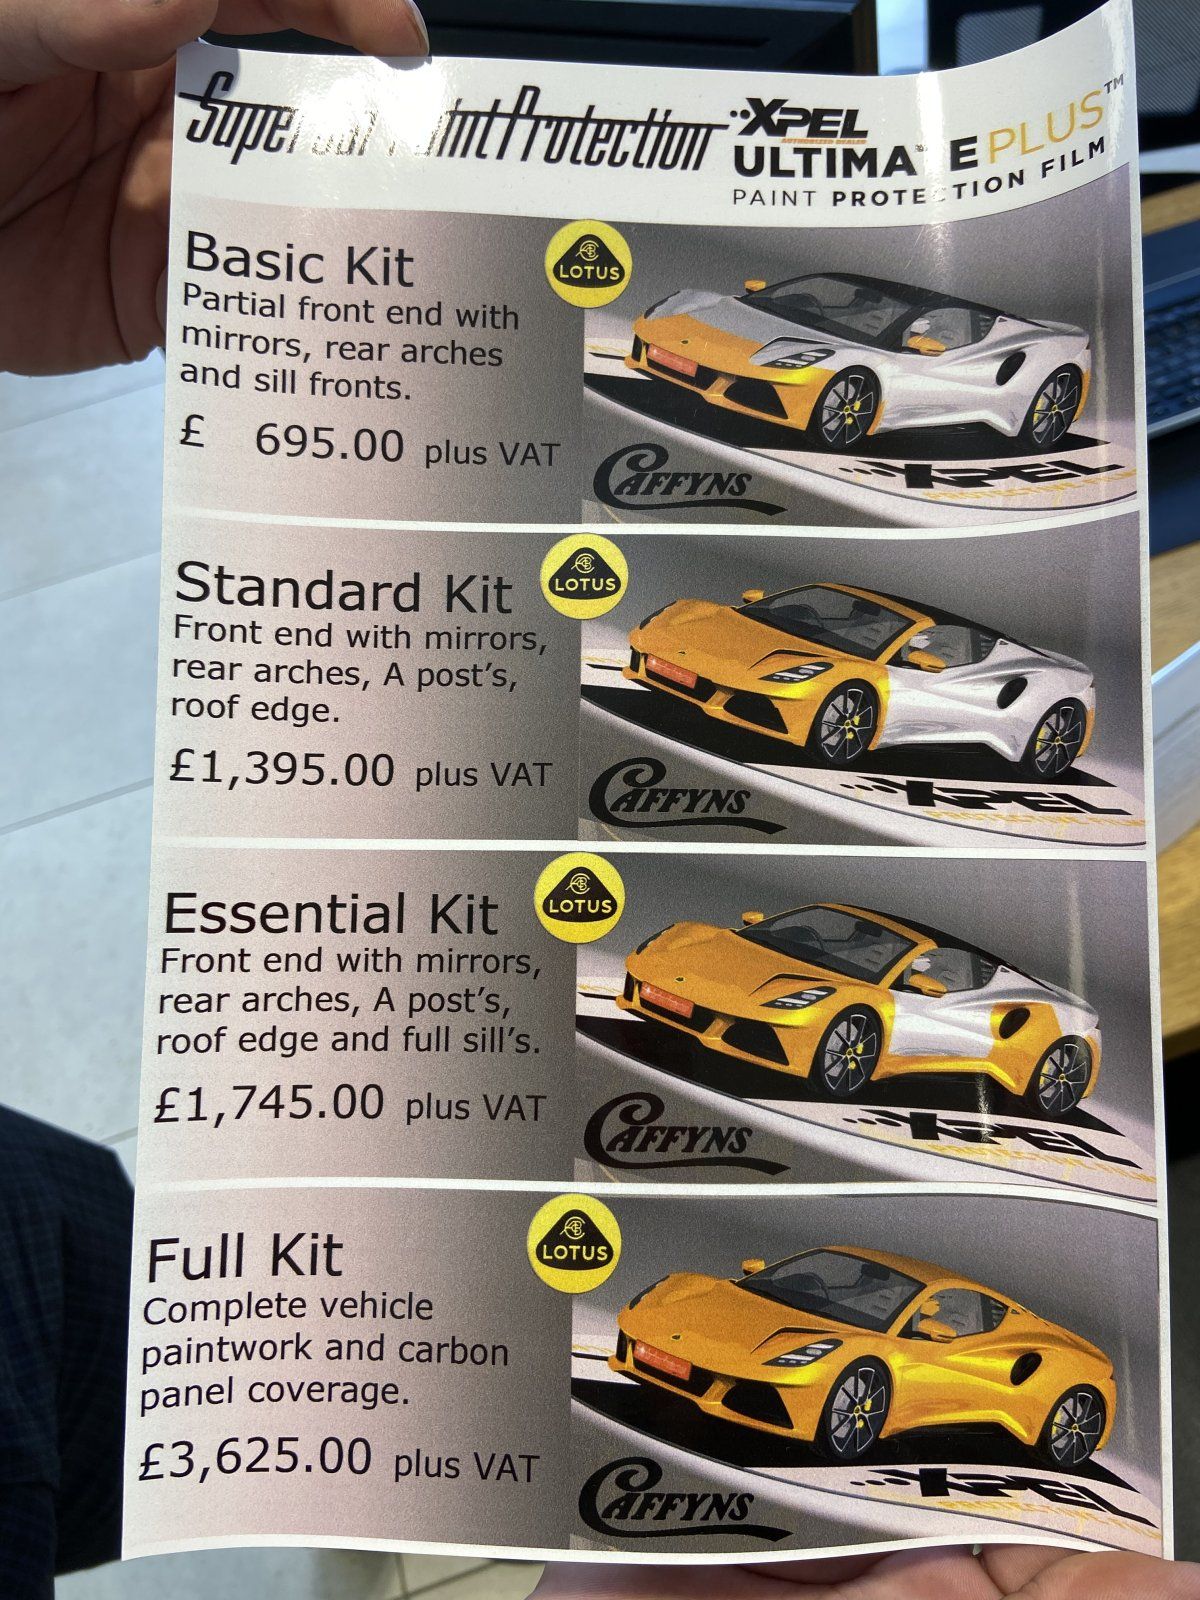 Kent Lotus PPF pricing and options (EmiraMike).jpeg